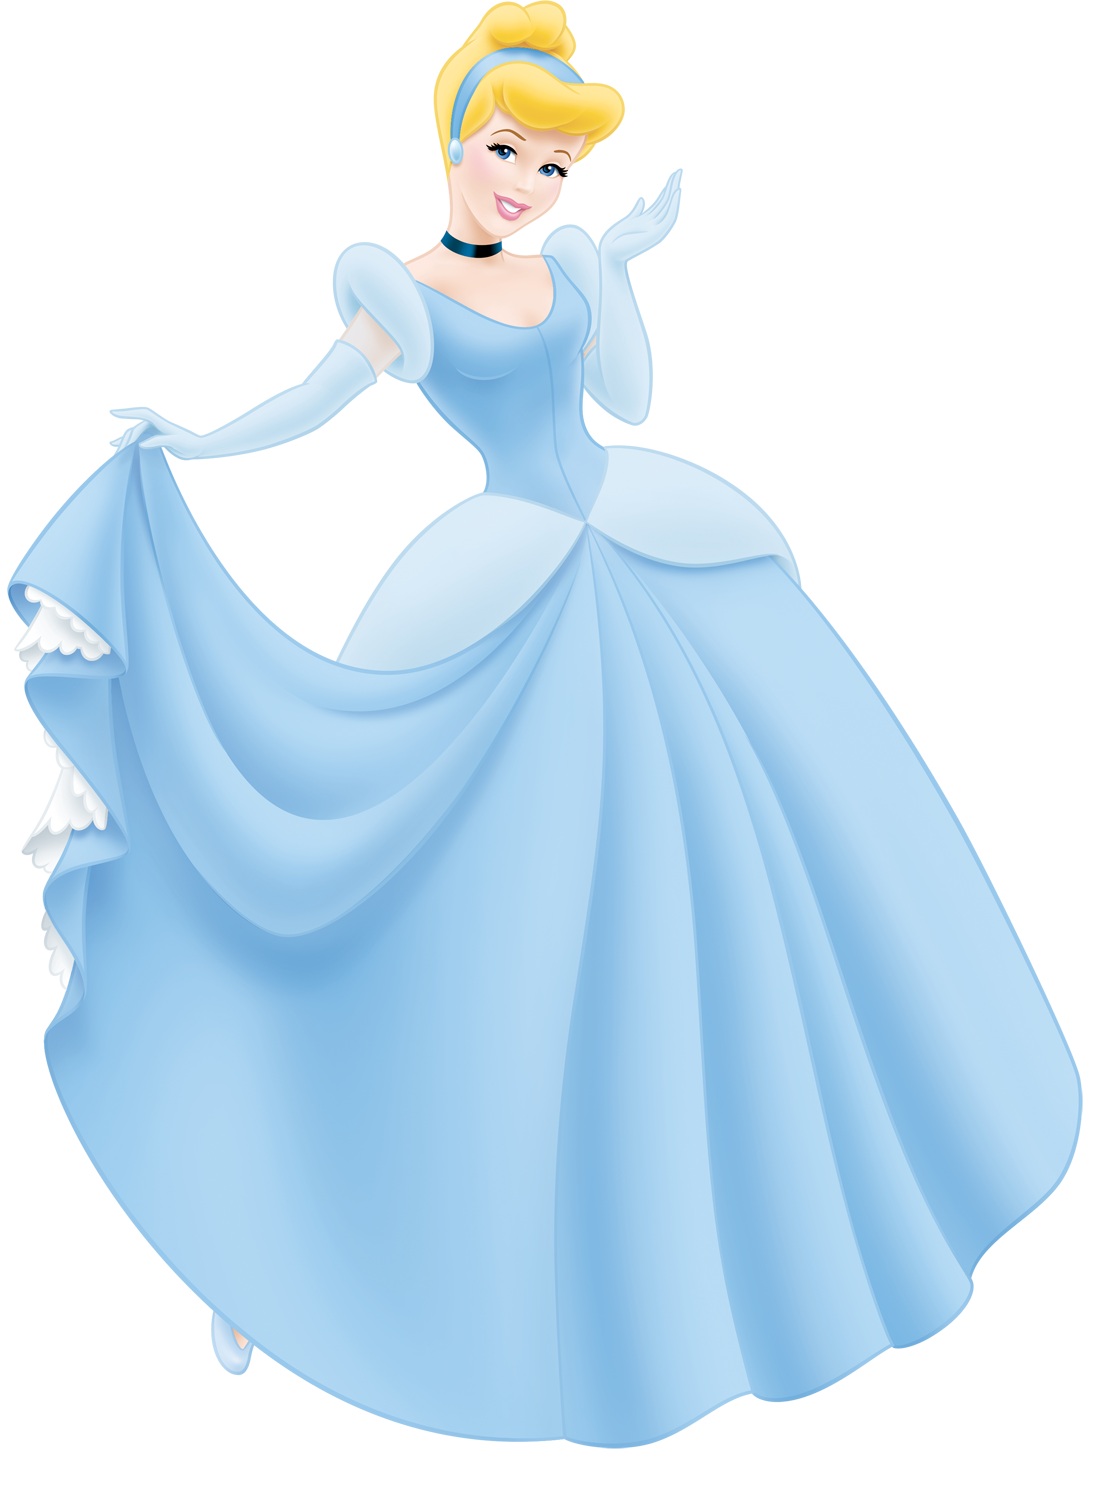 Cinderella Clipart Disney Princess Background Image for iPad